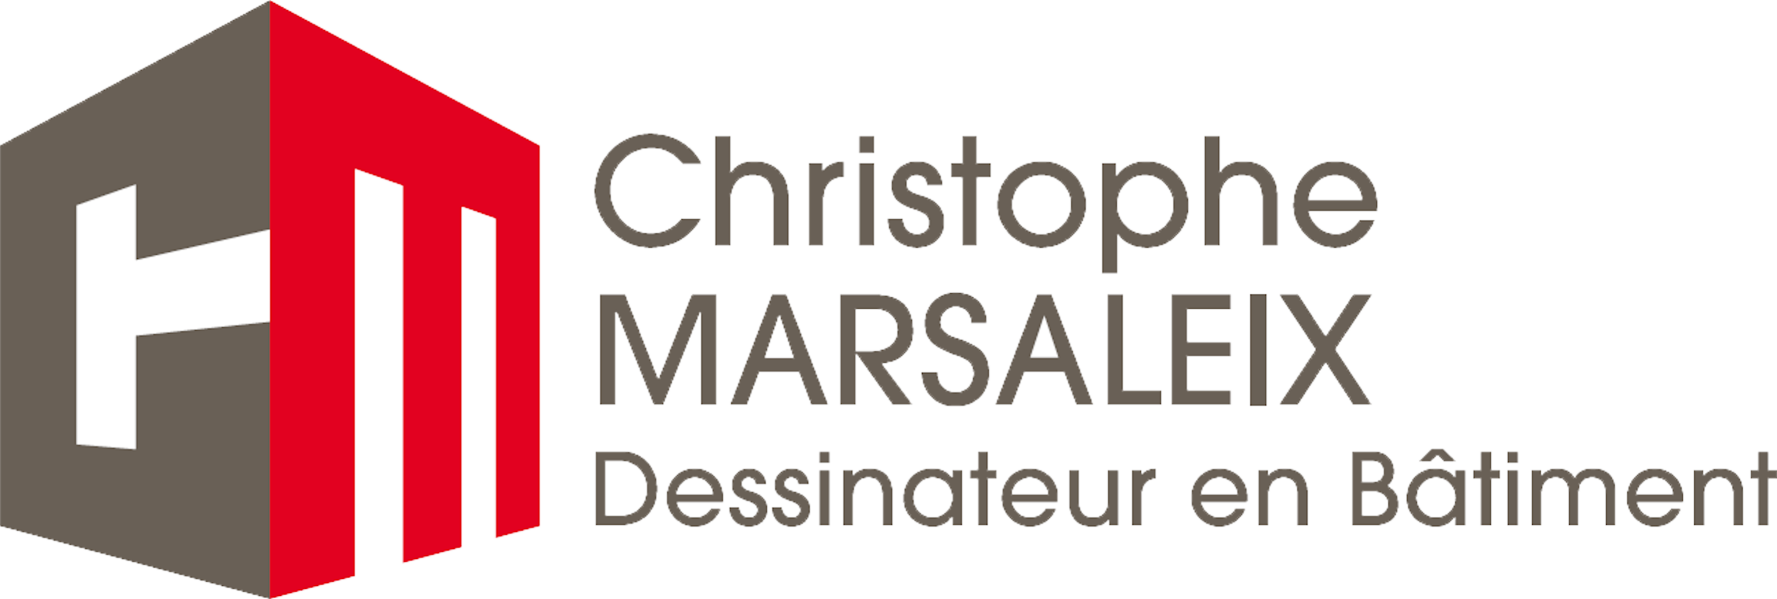 Christophe Marsaleix - AACPM